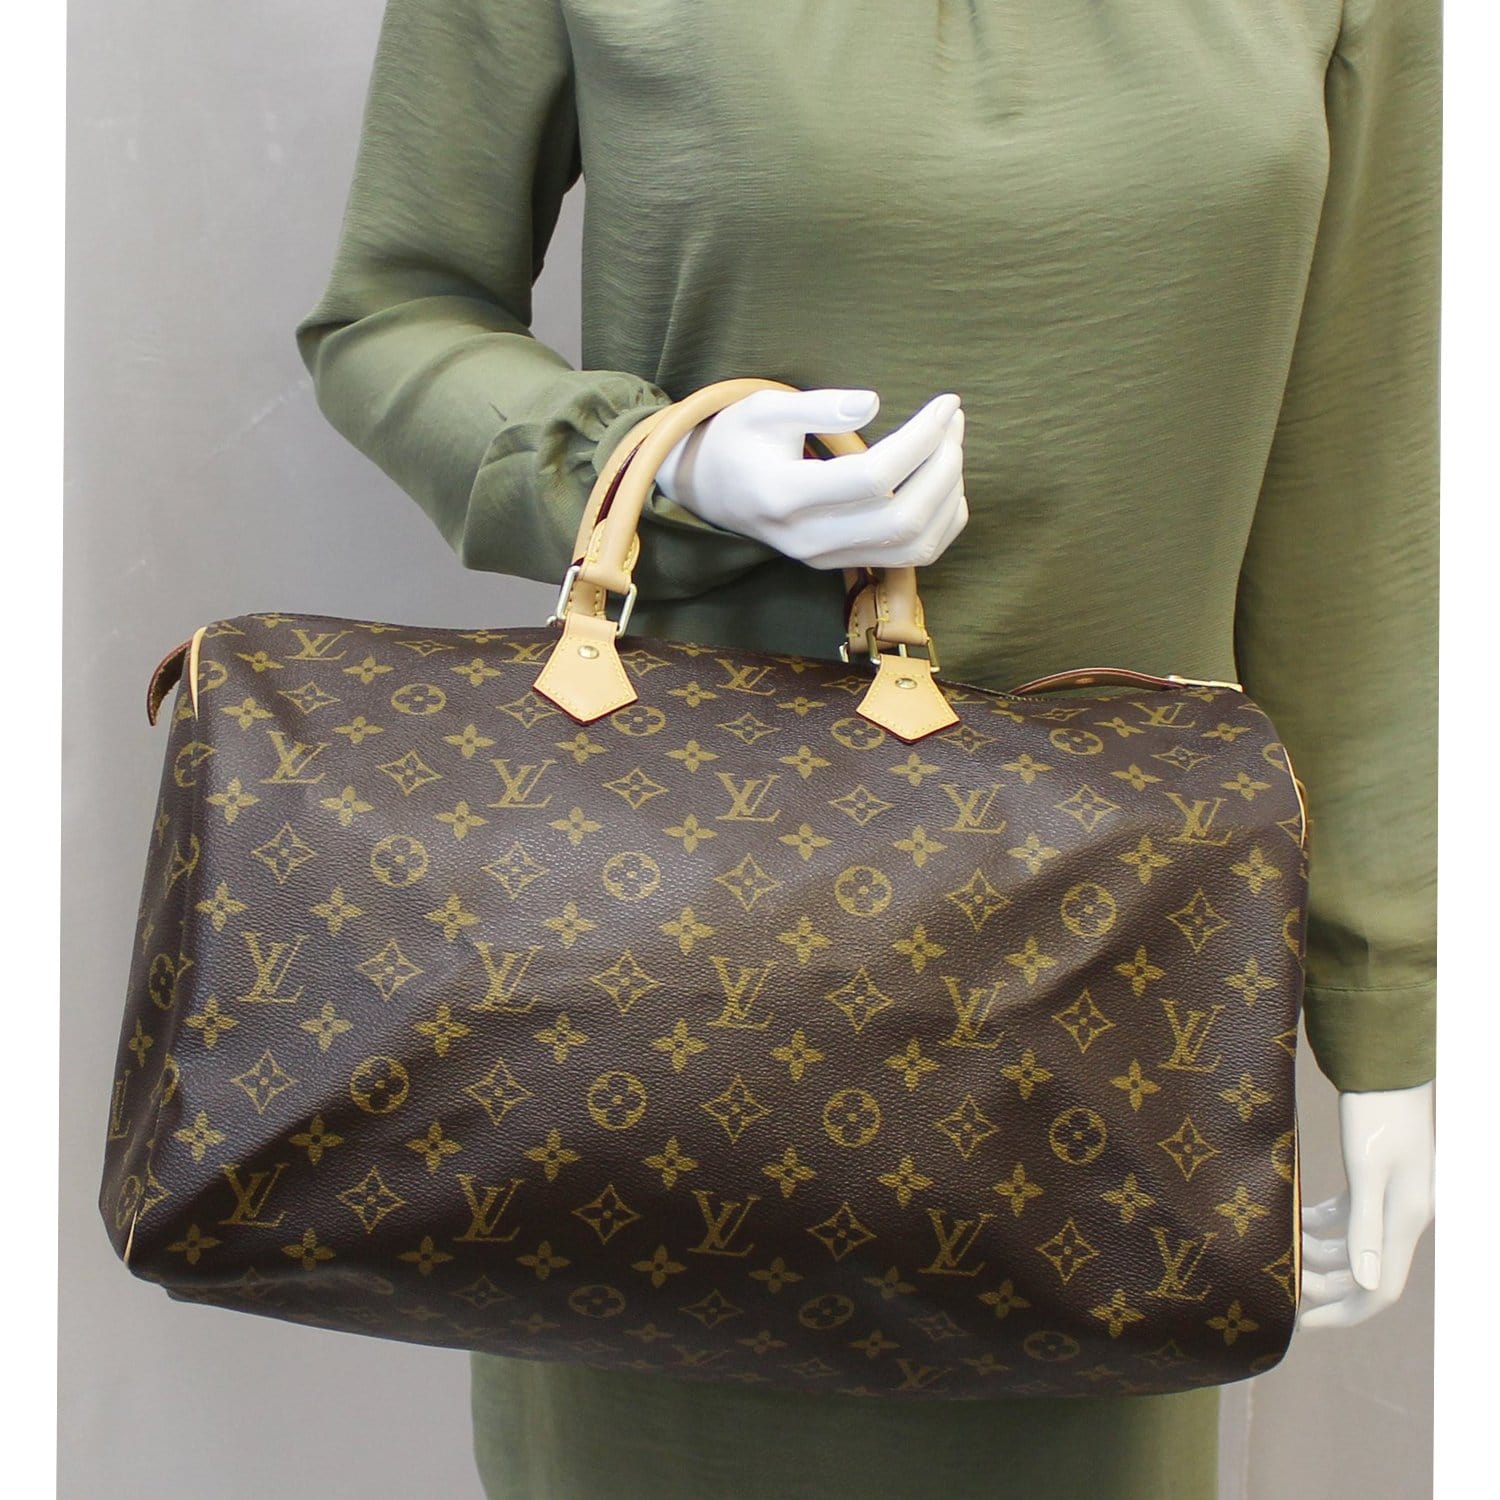 Louis Vuitton Speedy 40 Monogram Canvas Top Handle Bag on SALE